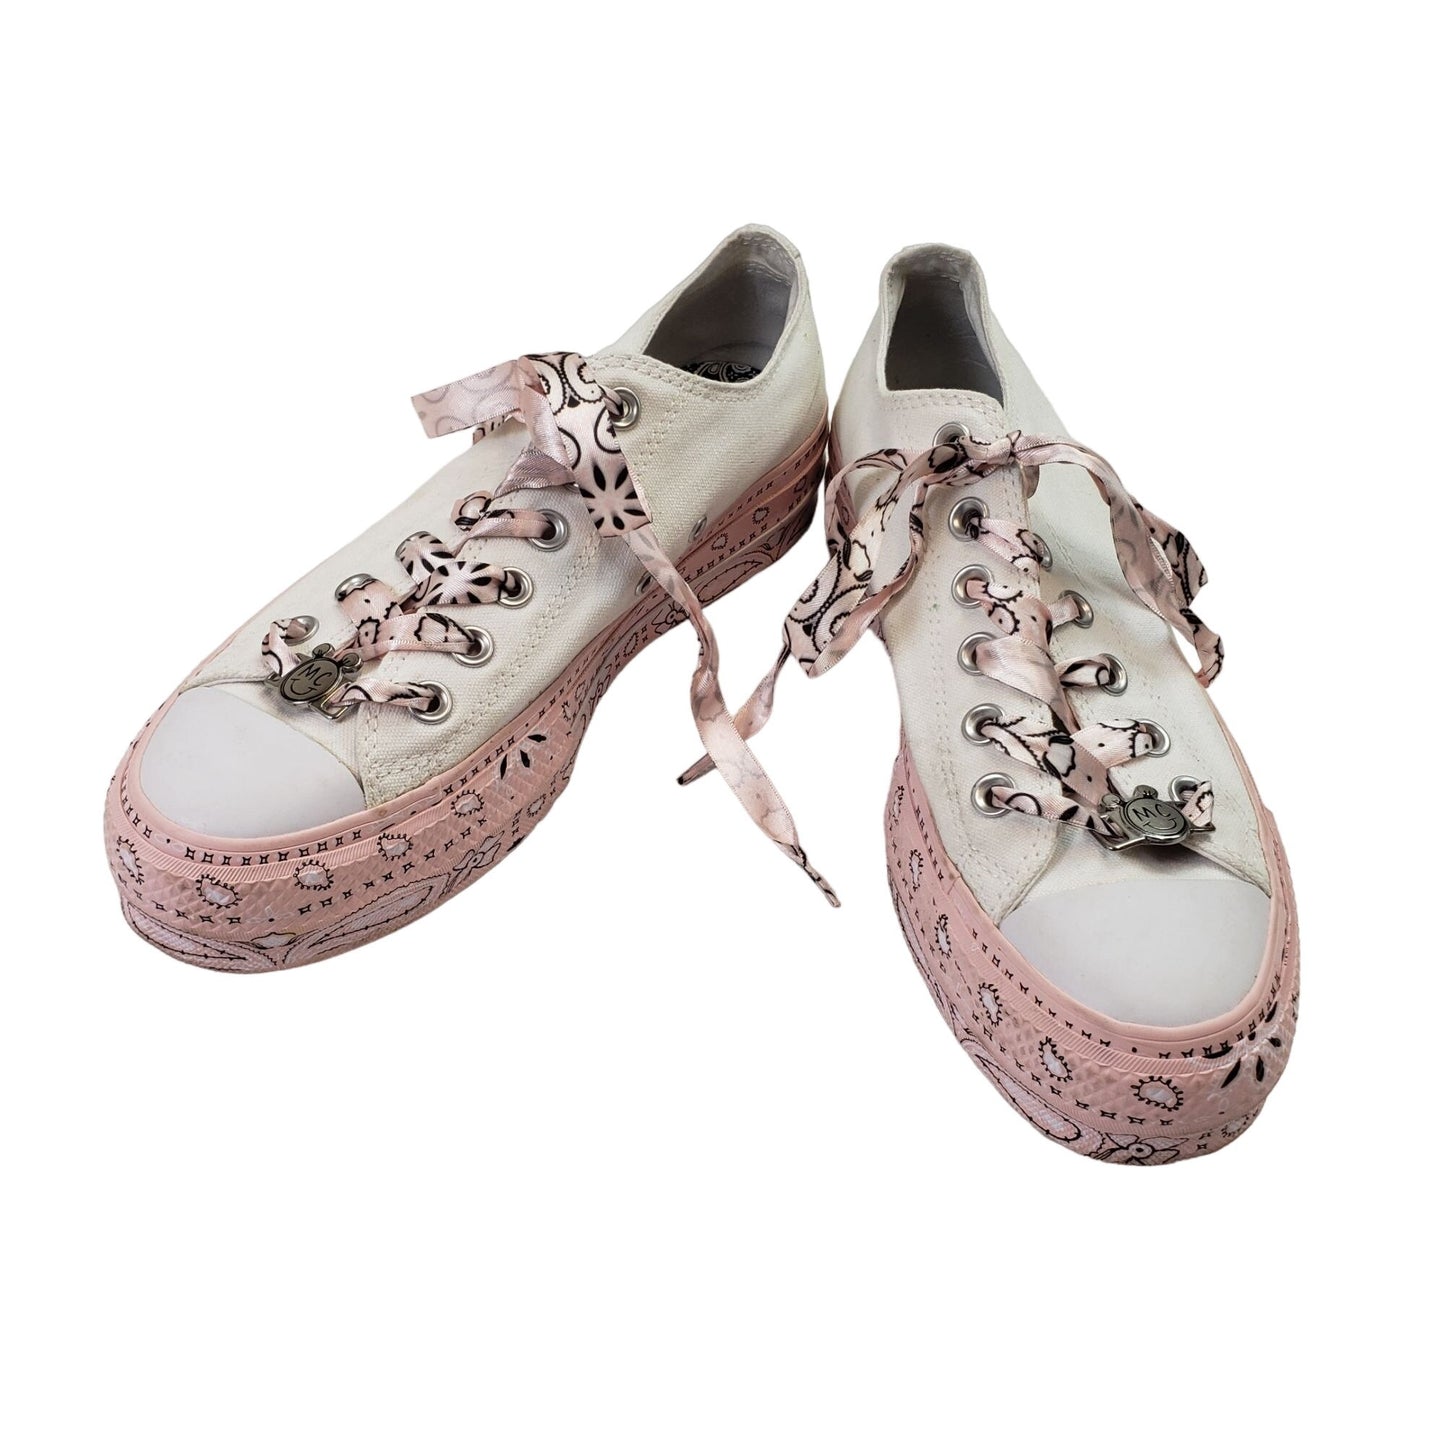 Converse x Miley Cyrus Limited Ed. Platform Sneakers White/Pink Bandana Size 7.5